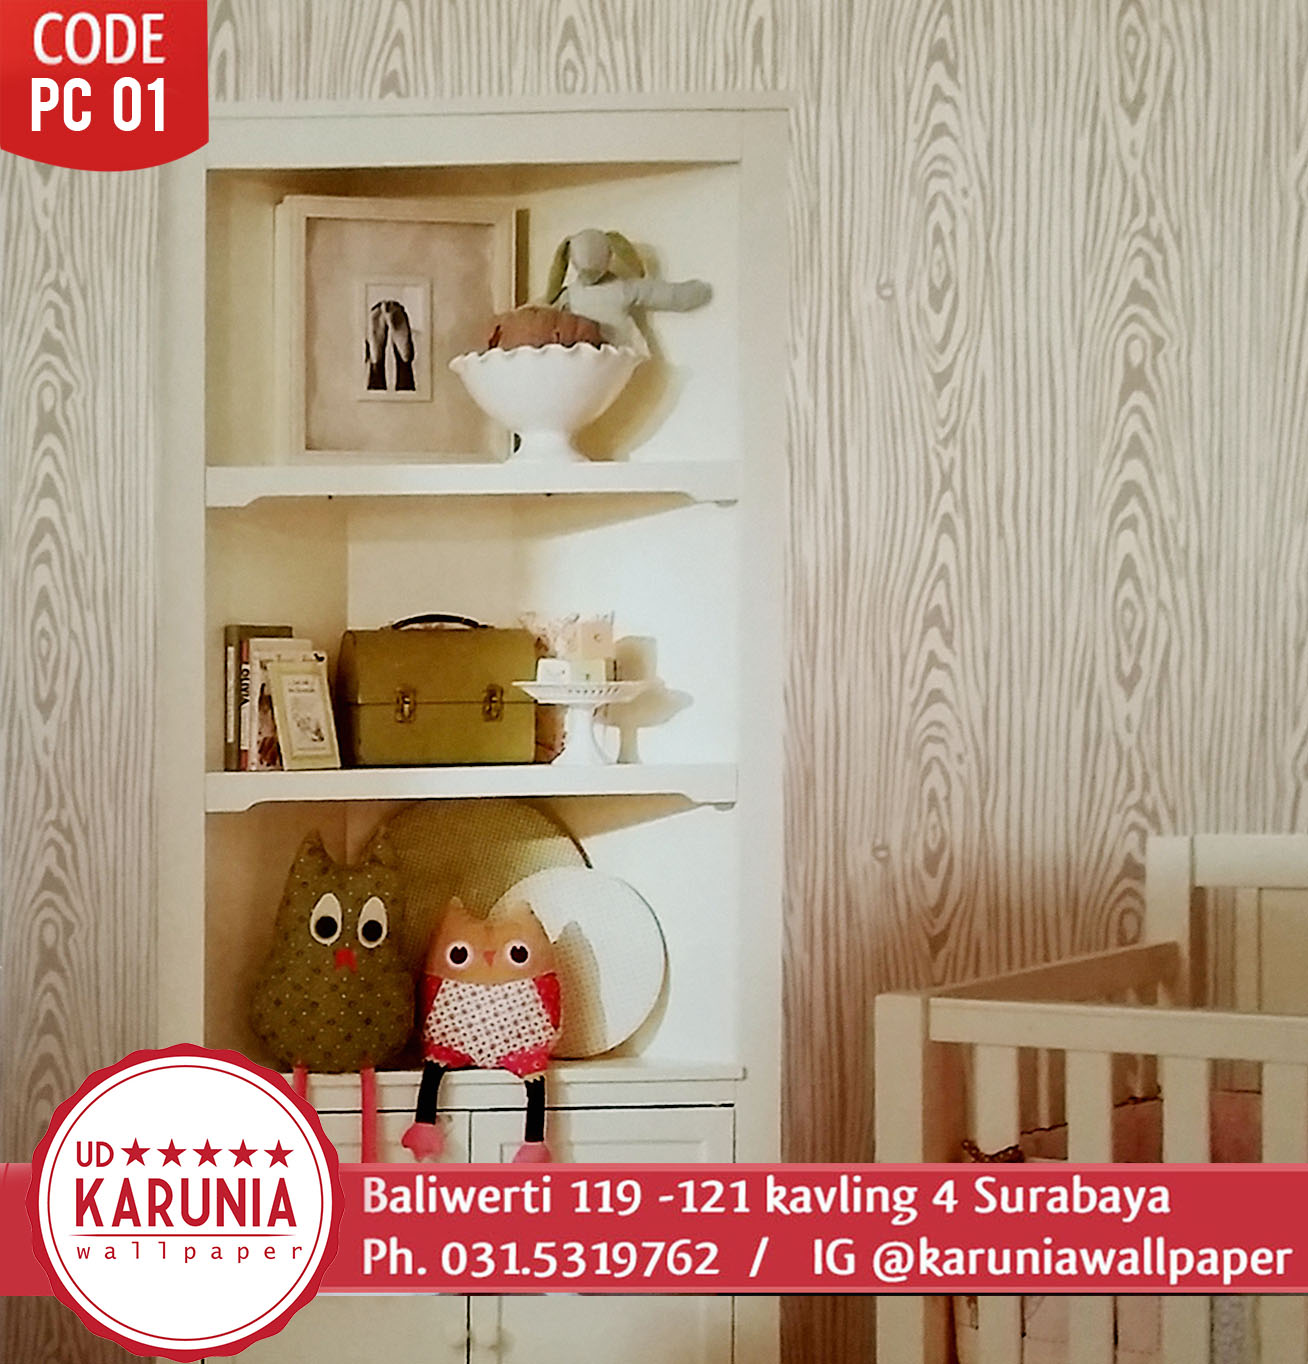 Jual Wallpaper Dinding Motif Serat Kayu Karuniawallpaper - Shelf - HD Wallpaper 